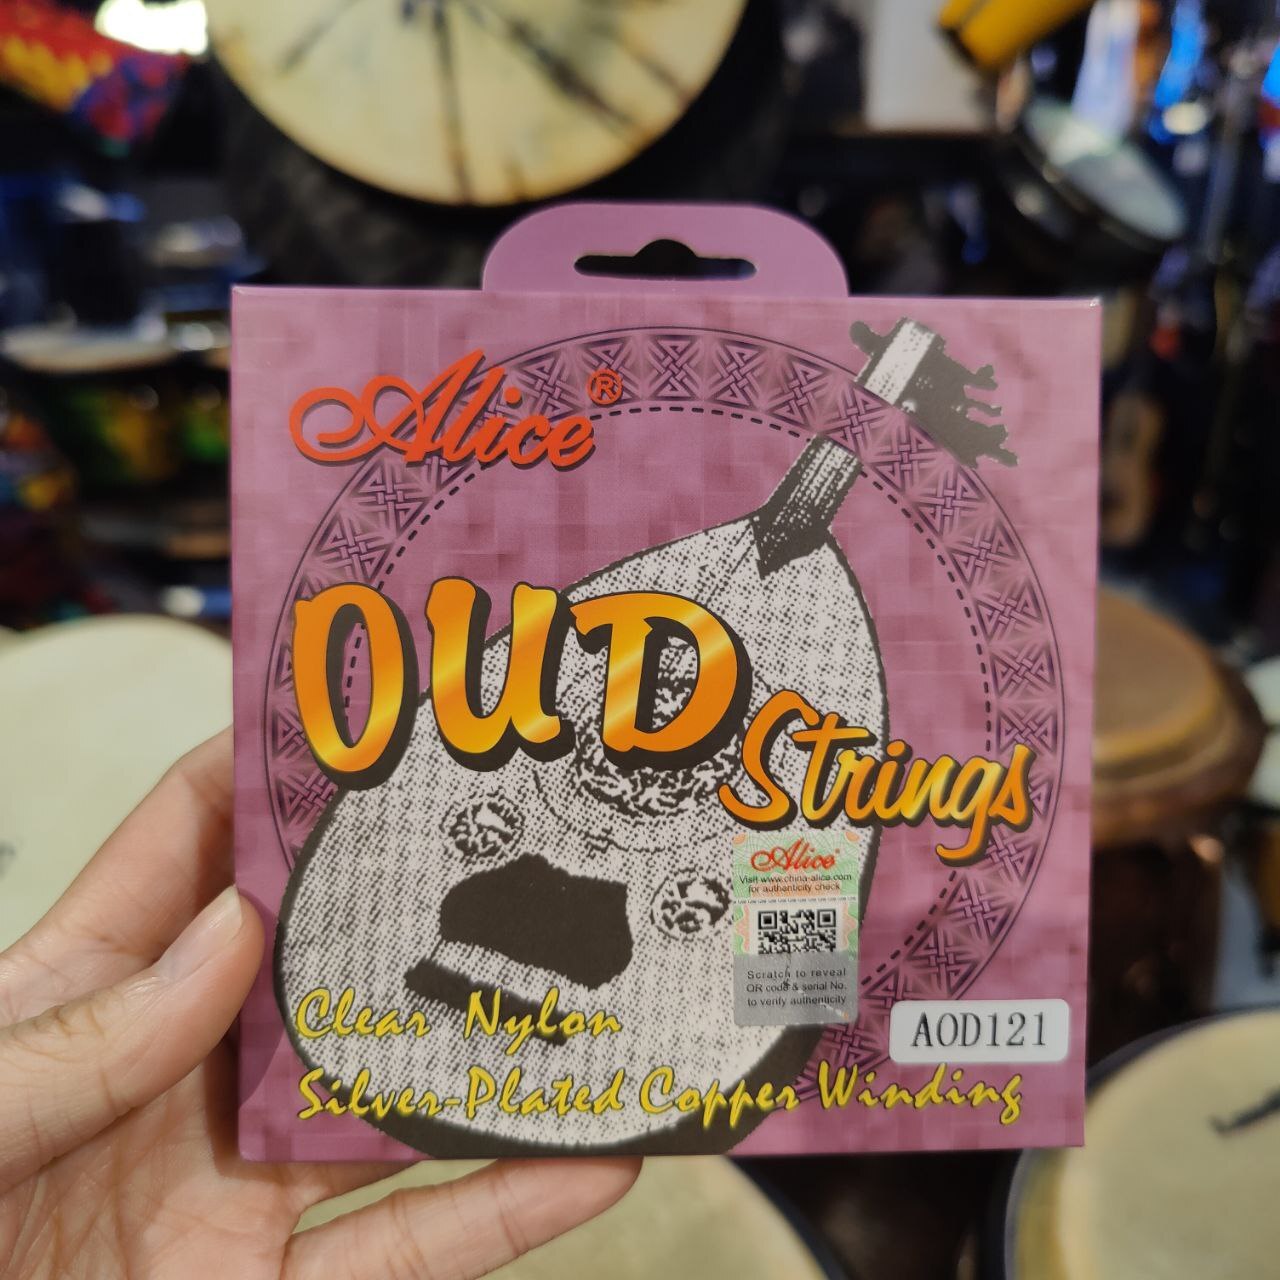 Alice OUD 12 strings - AOD121_1